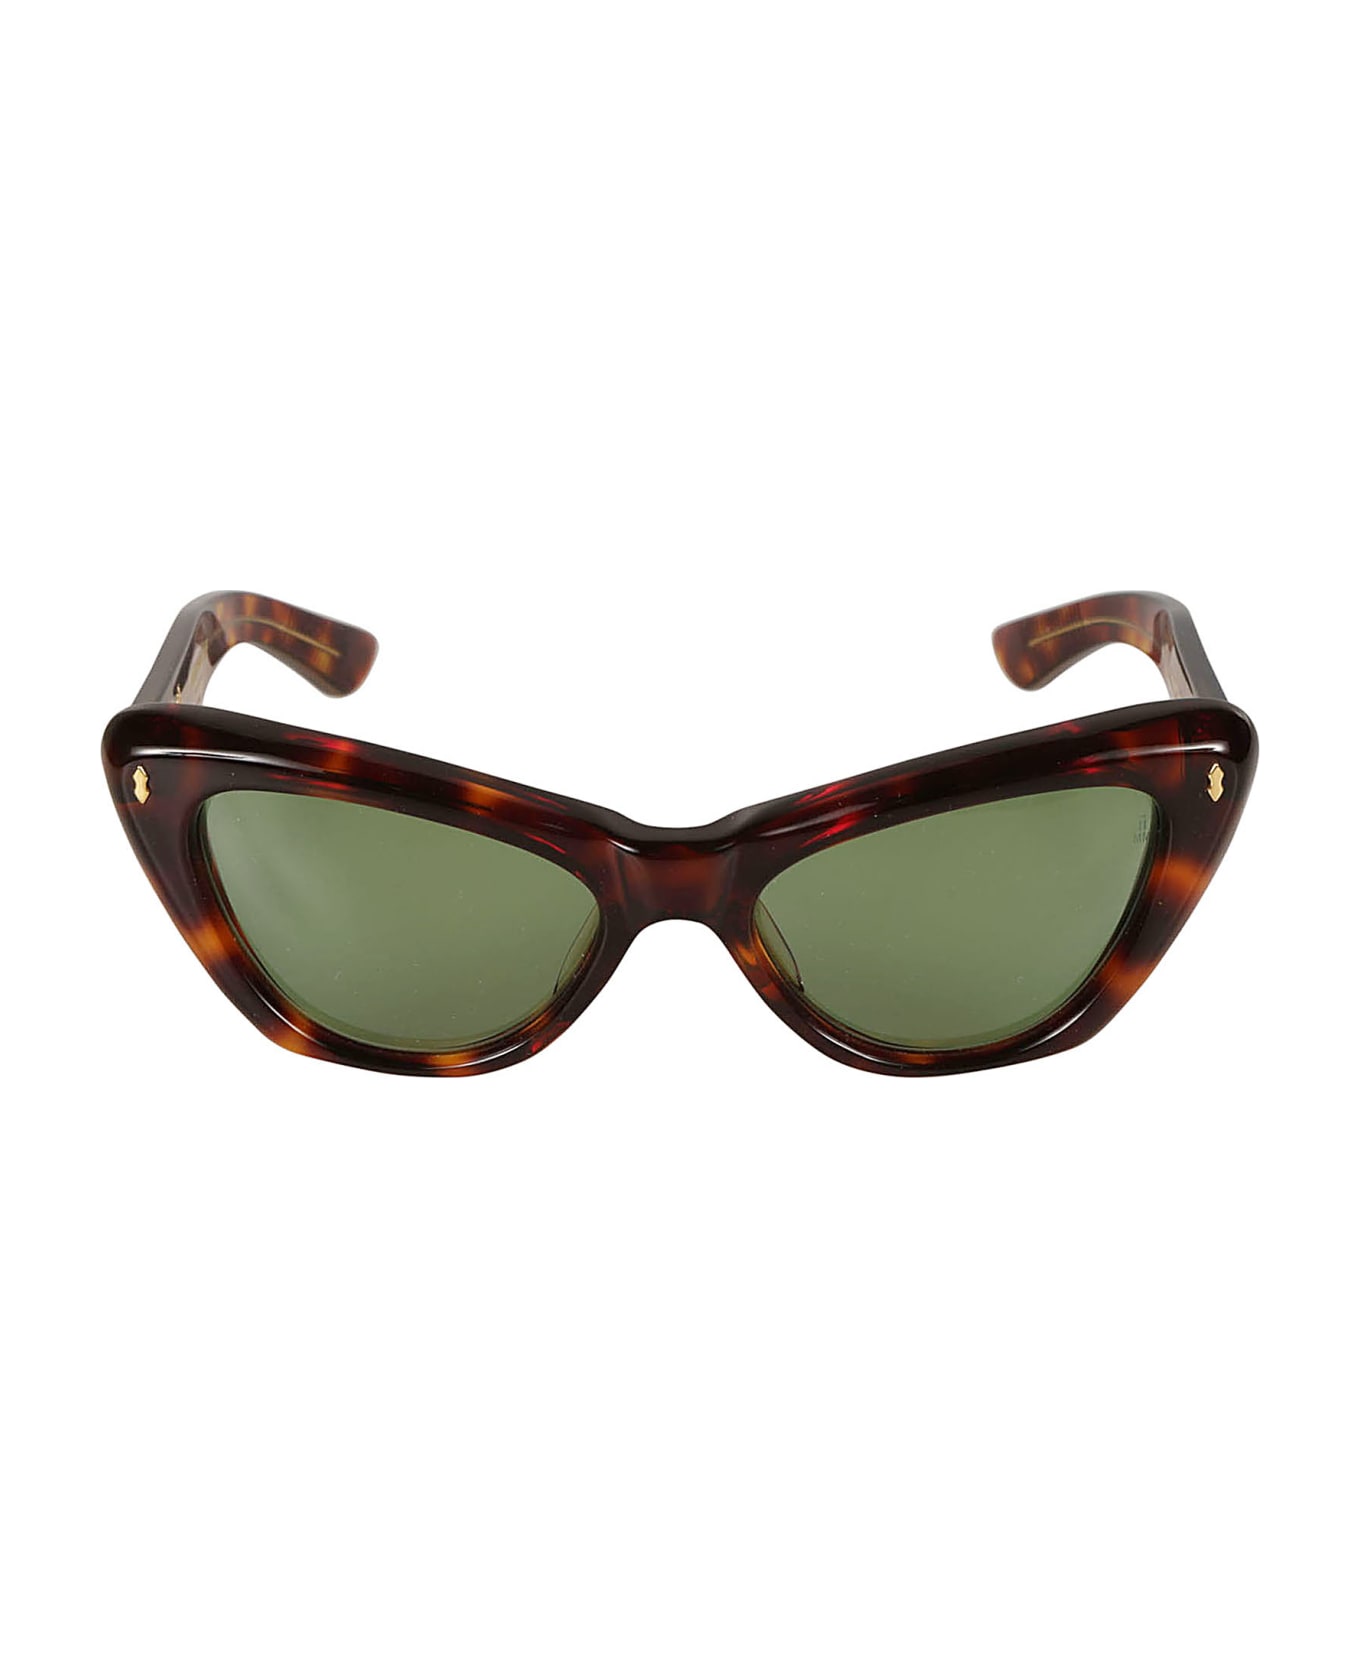 Jacques Marie Mage Kelly Sunglasses Sunglasses - havana サングラス